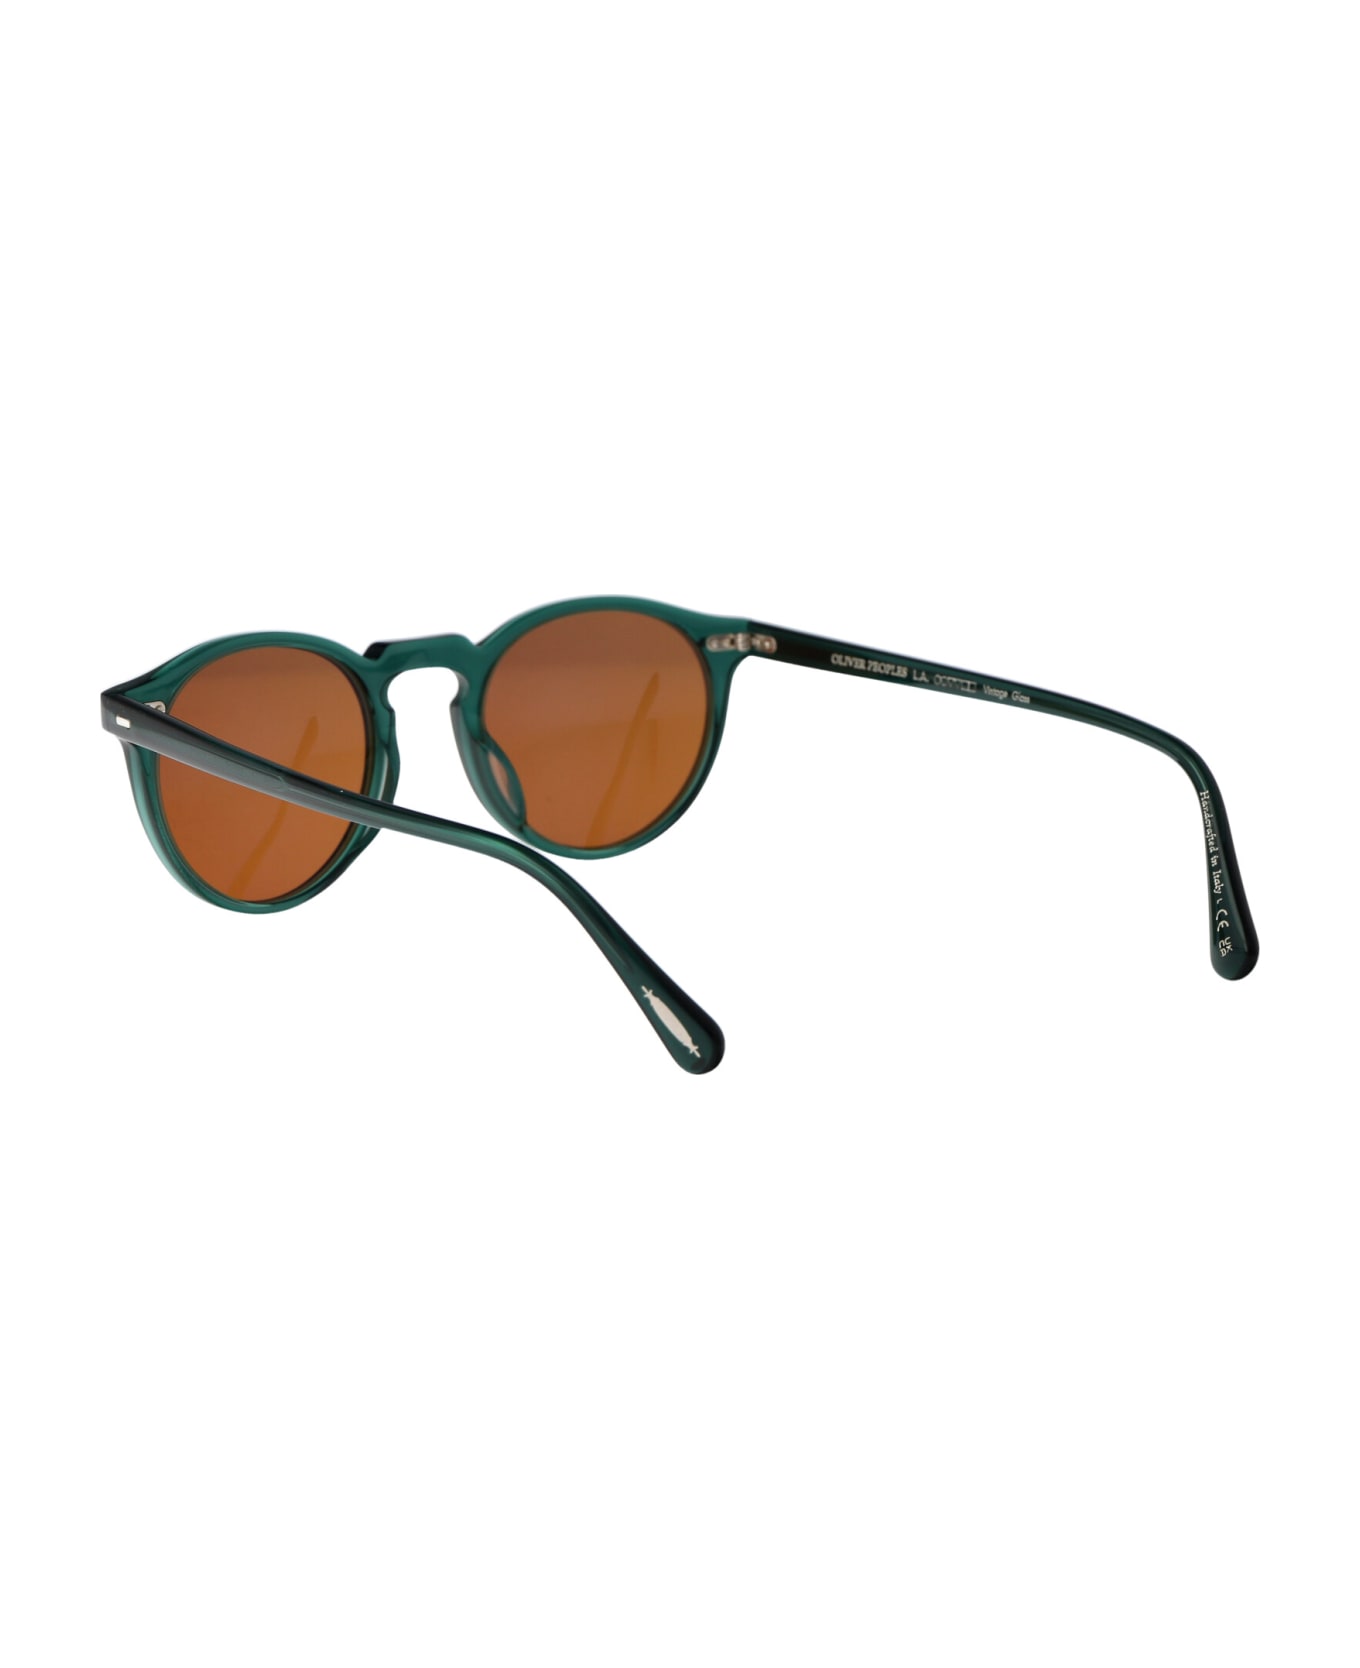 Oliver Peoples Gregory Peck Sun Sunglasses - 176353 Translucent Dark Teal